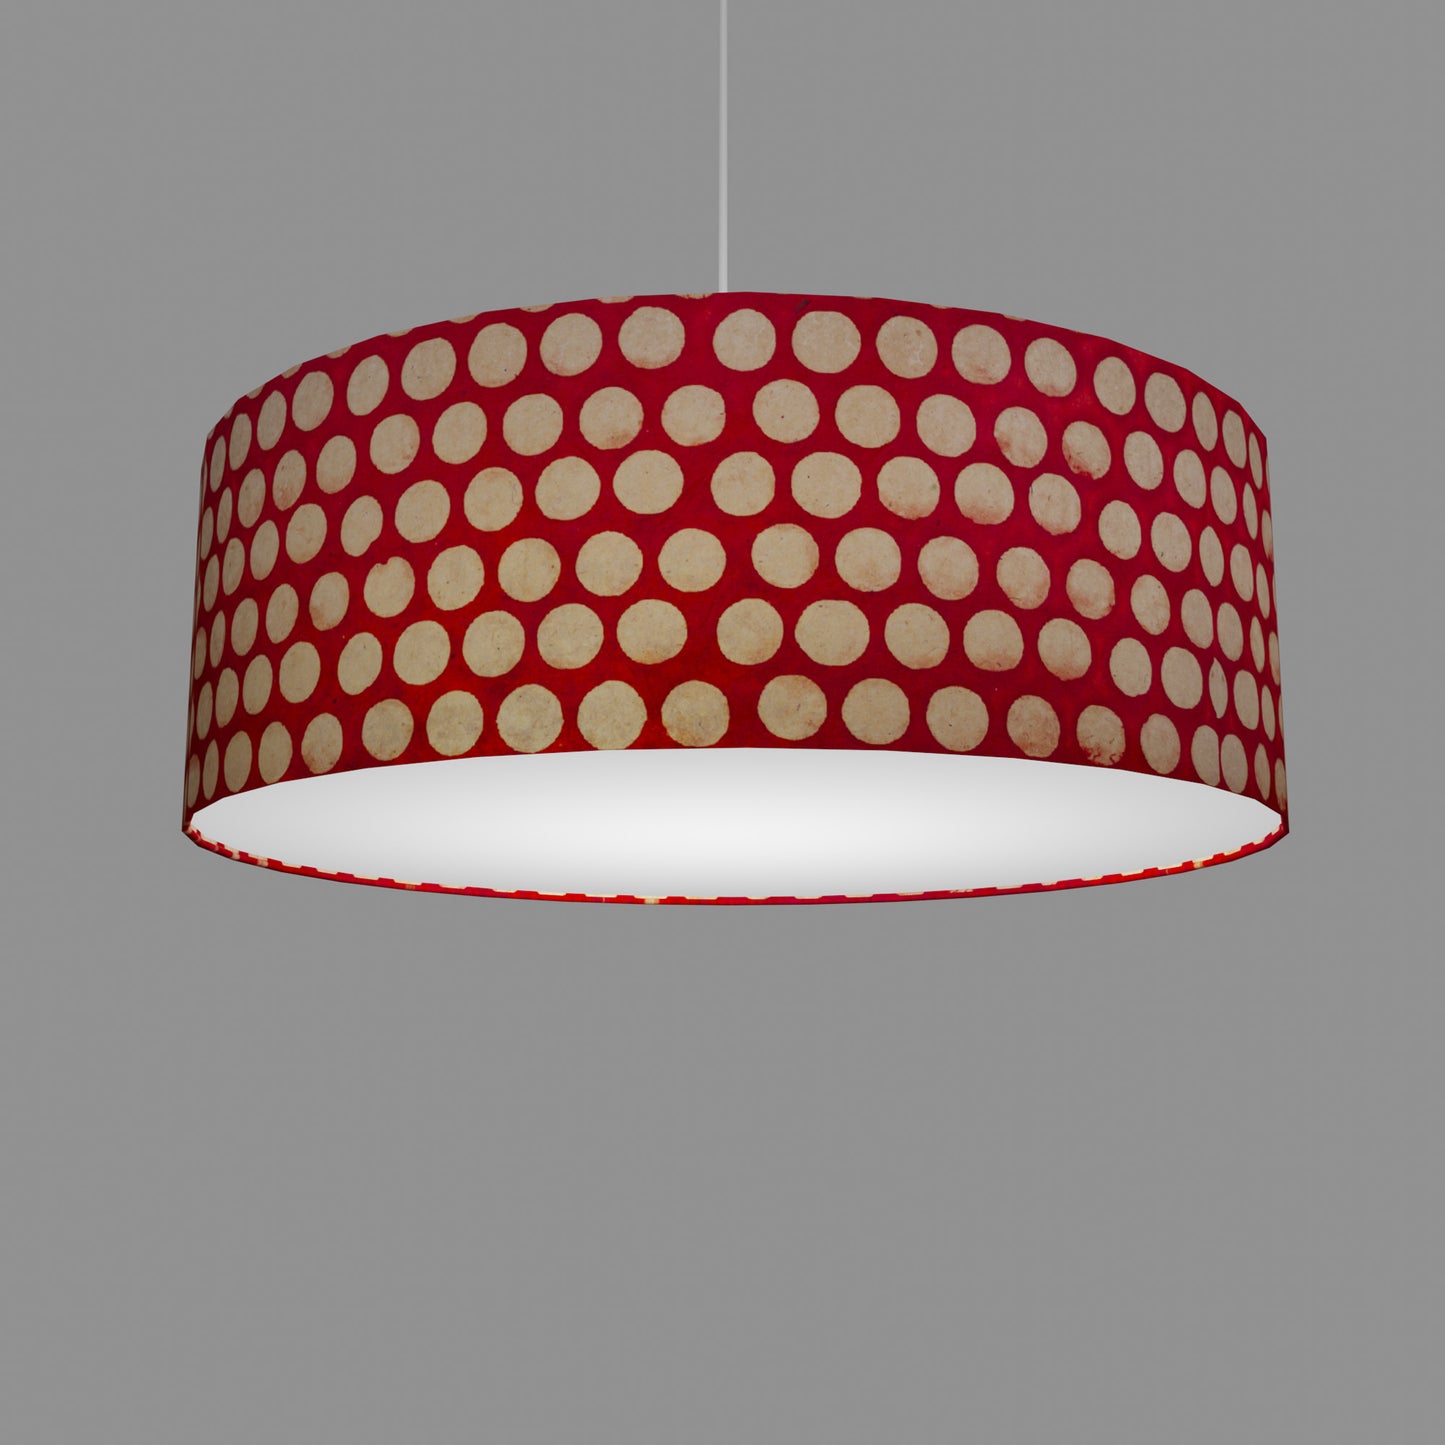 Drum Lamp Shade - P84 - Batik Dots on Red, 60cm(d) x 20cm(h)